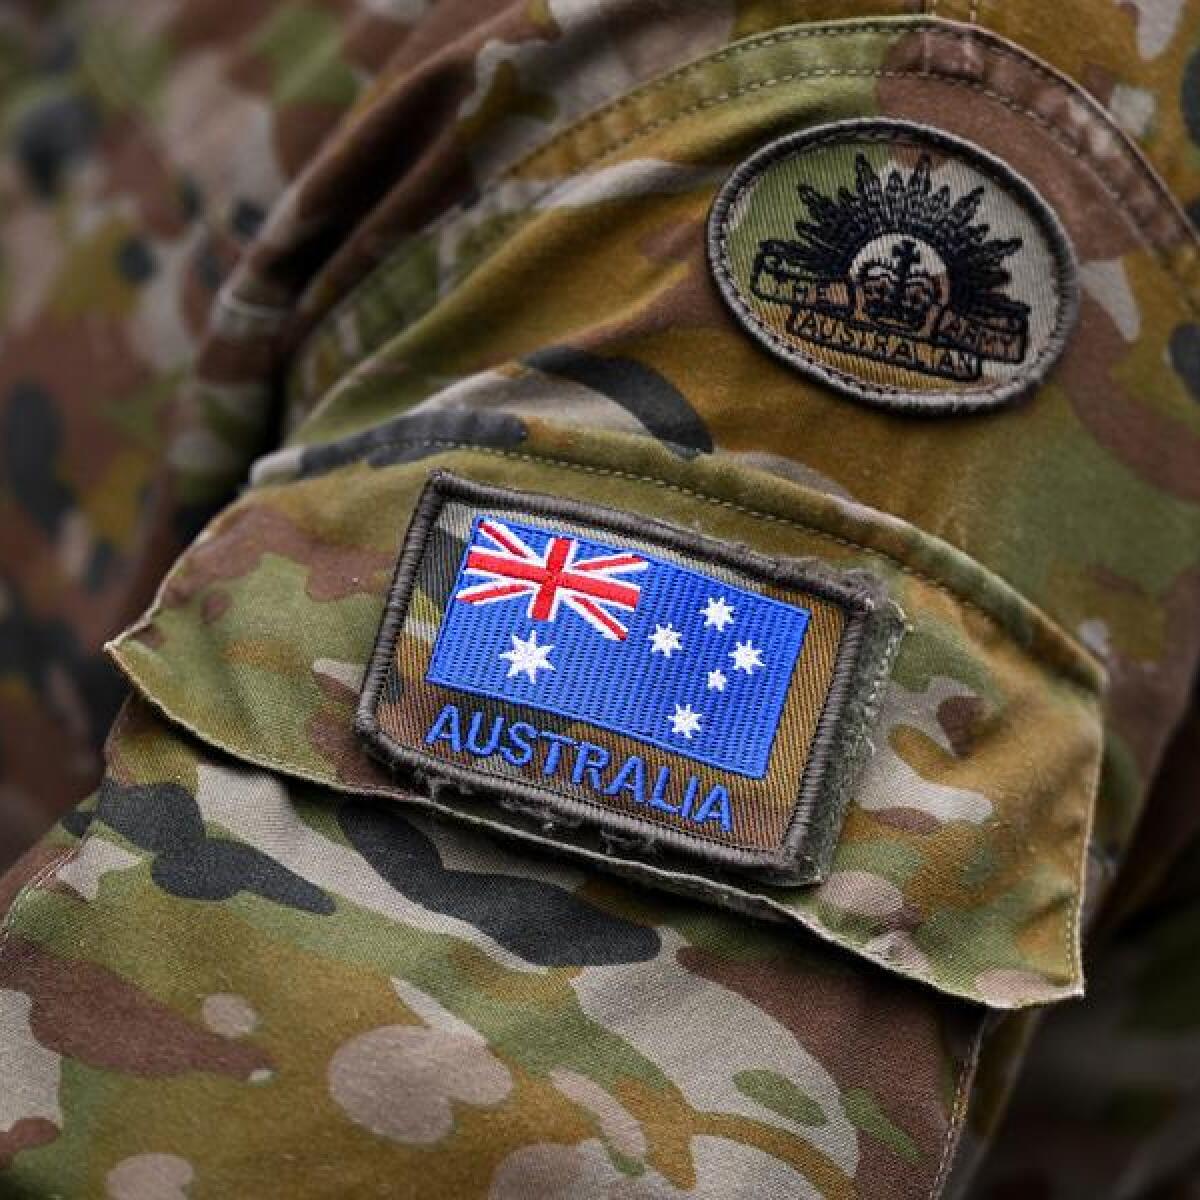 An Australian flag pictured on an ADF uniform